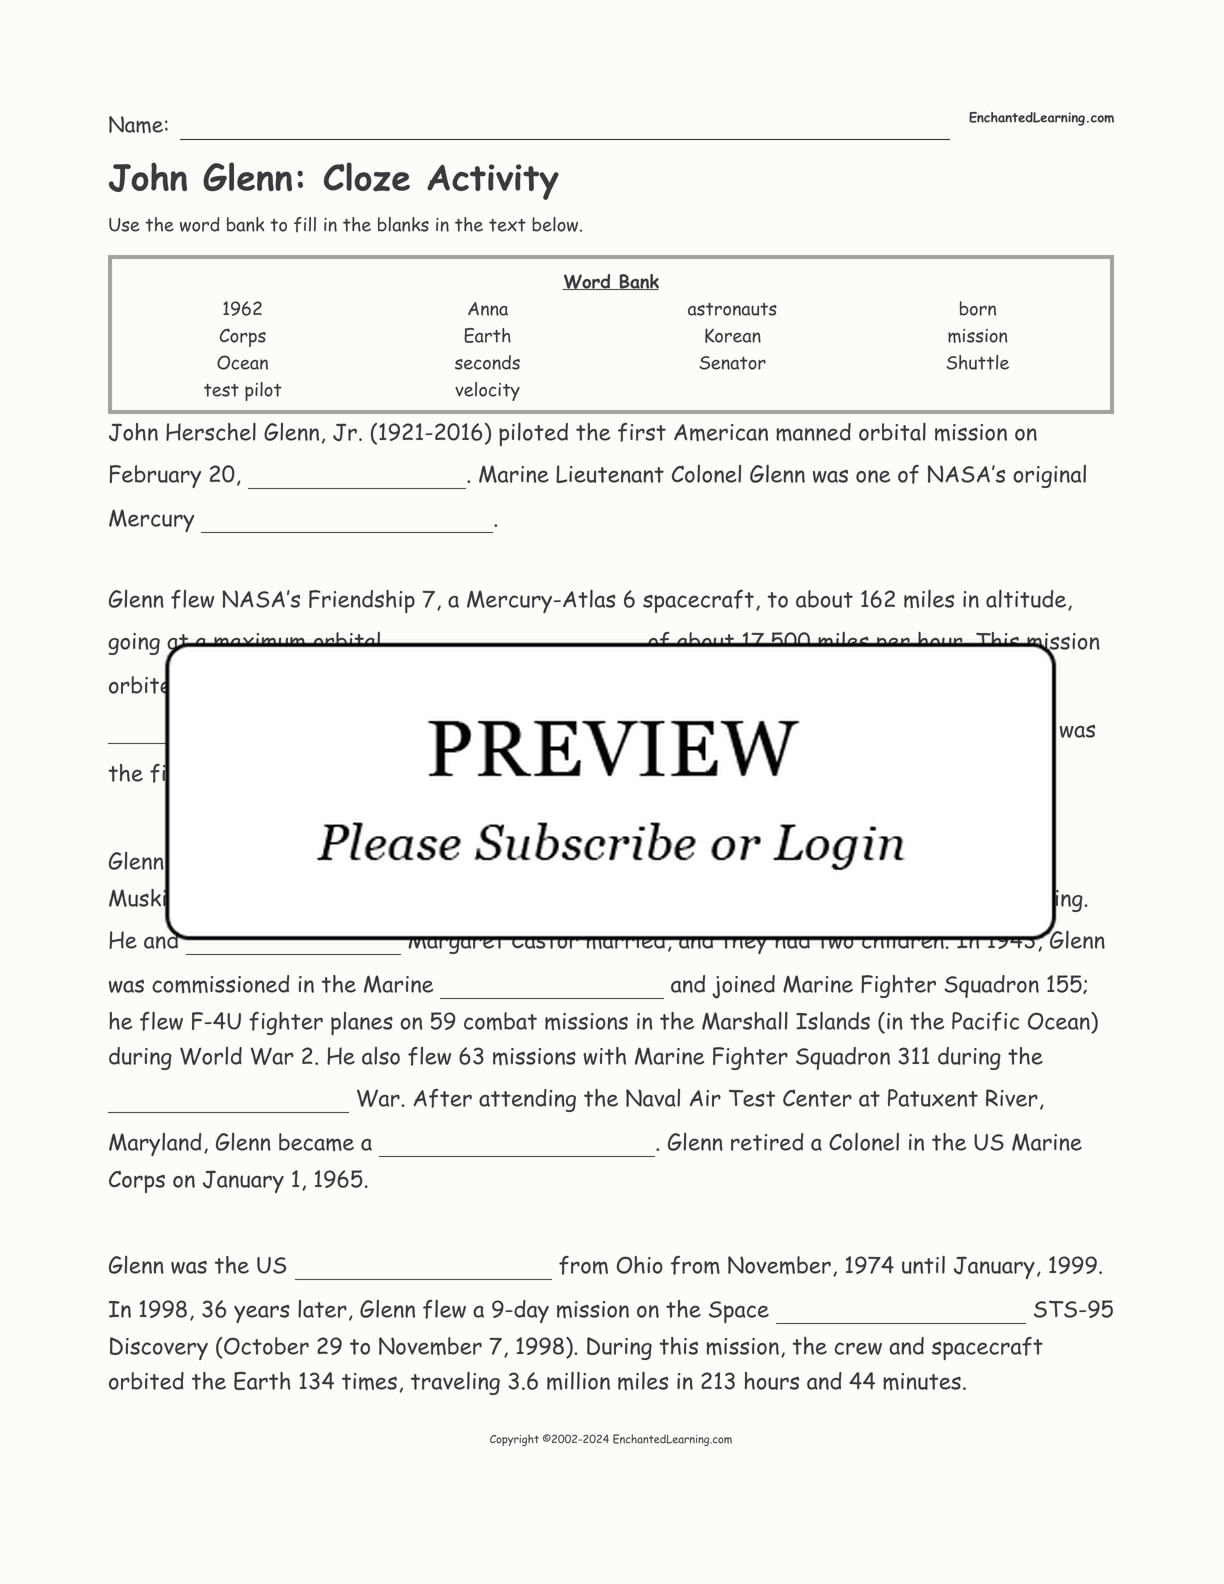 John Glenn: Cloze Activity interactive worksheet page 1